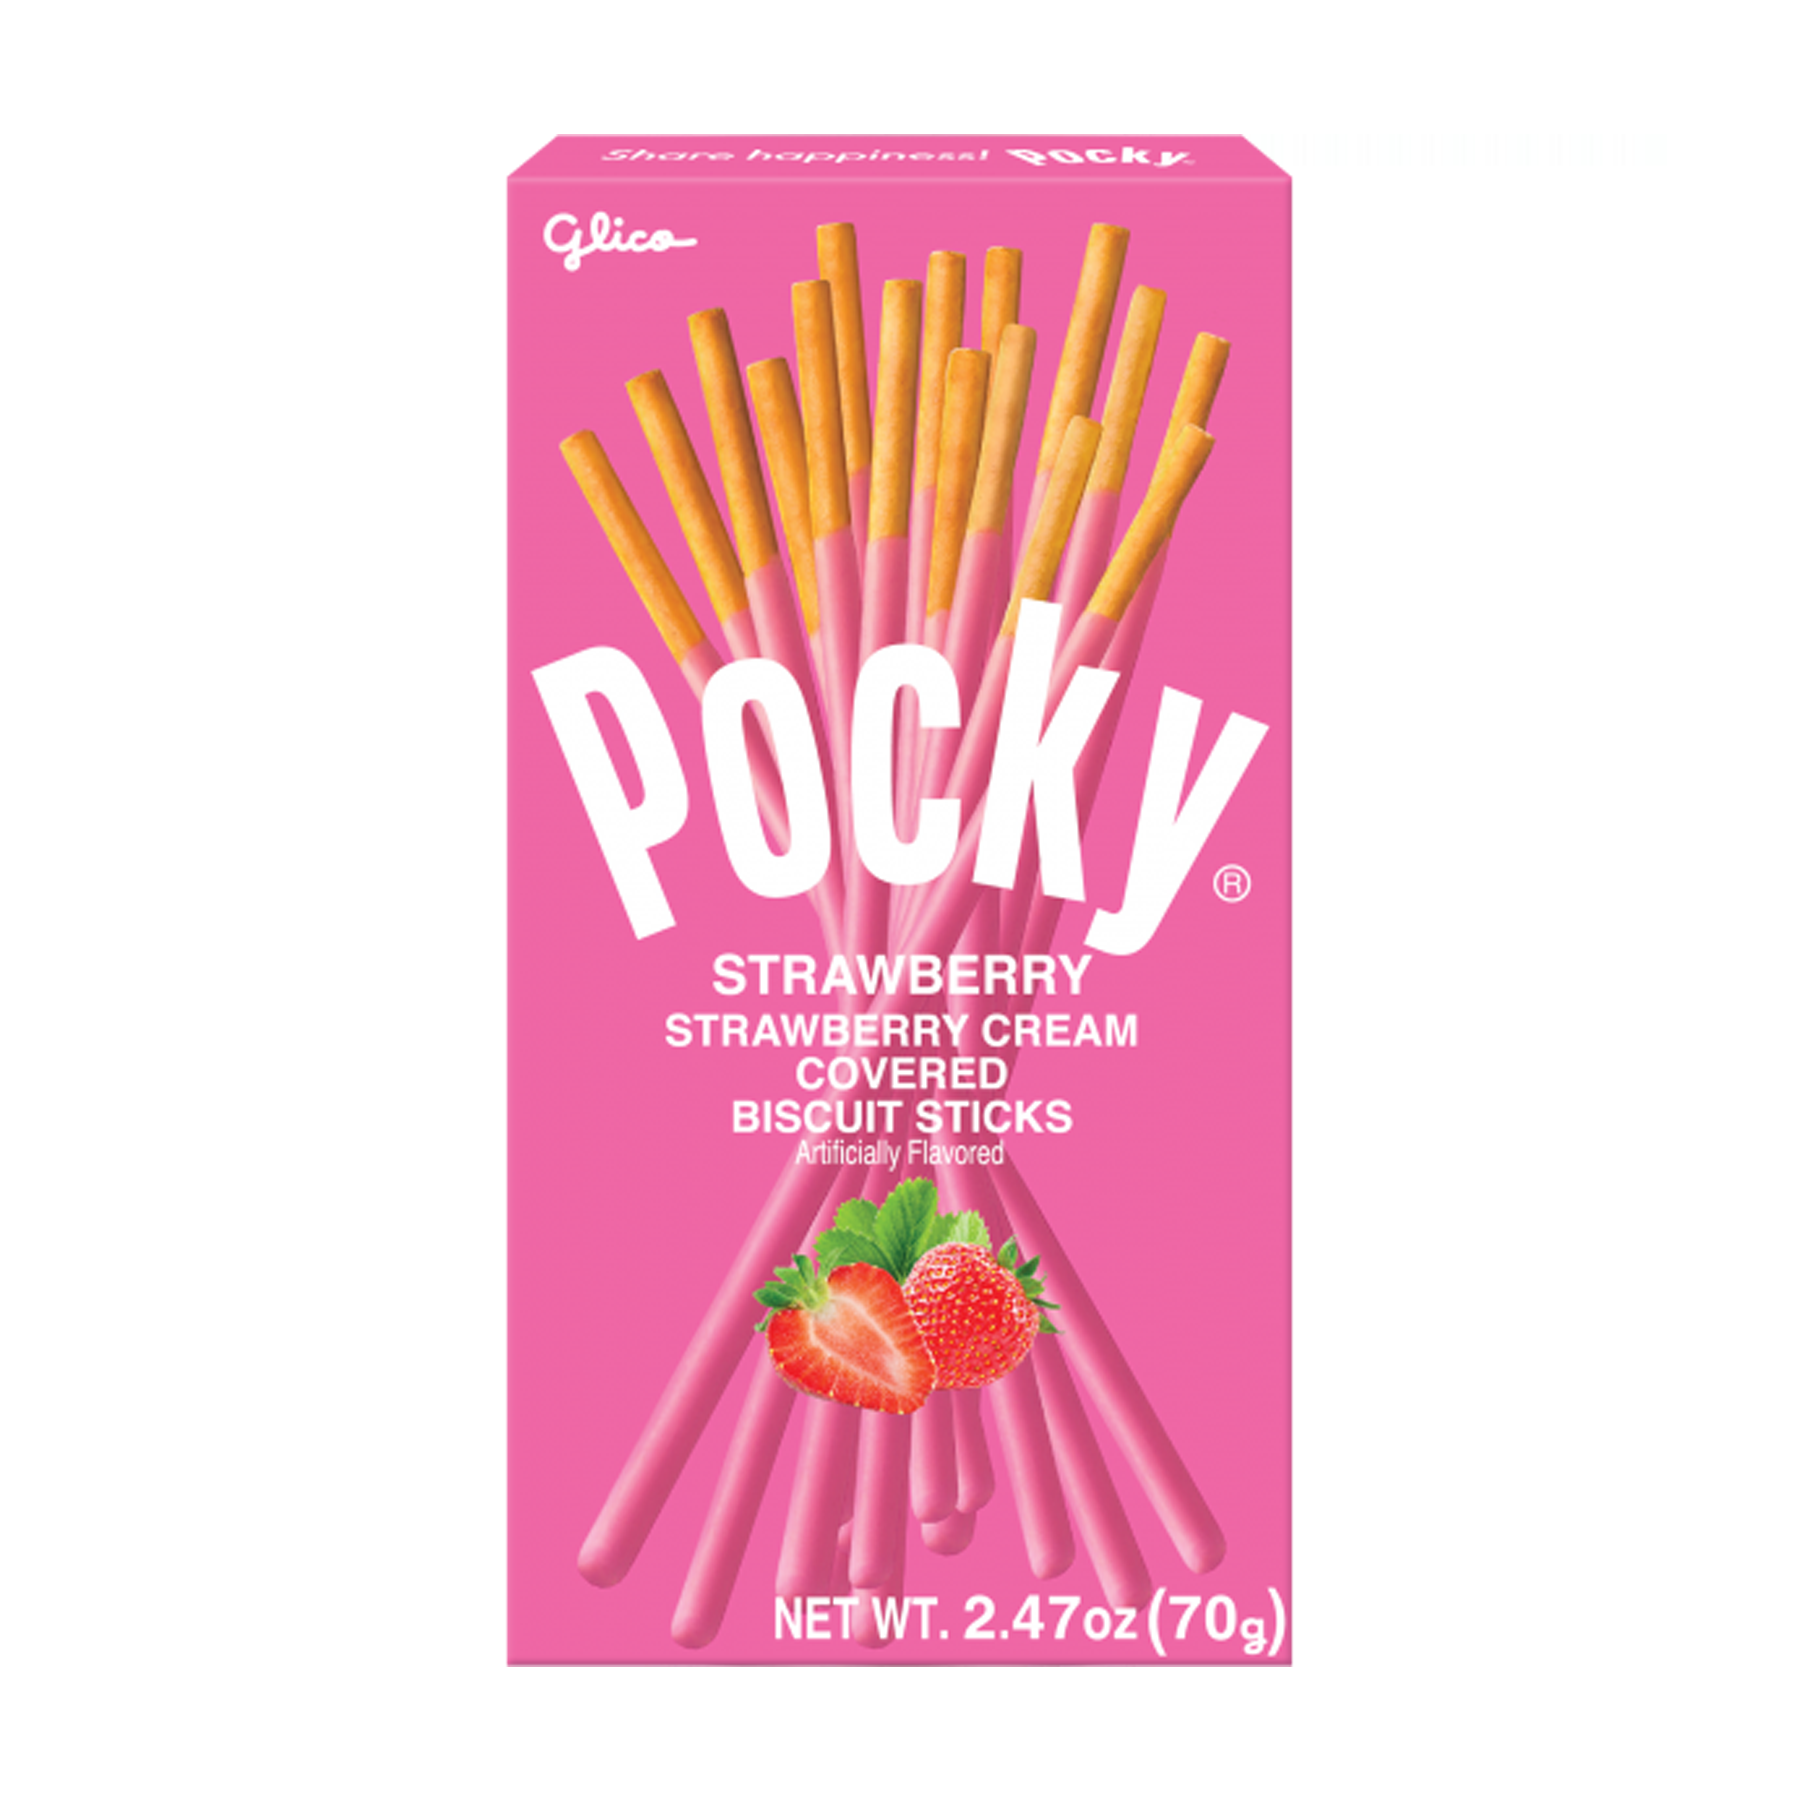 Glico Pocky Strawberry (70g)